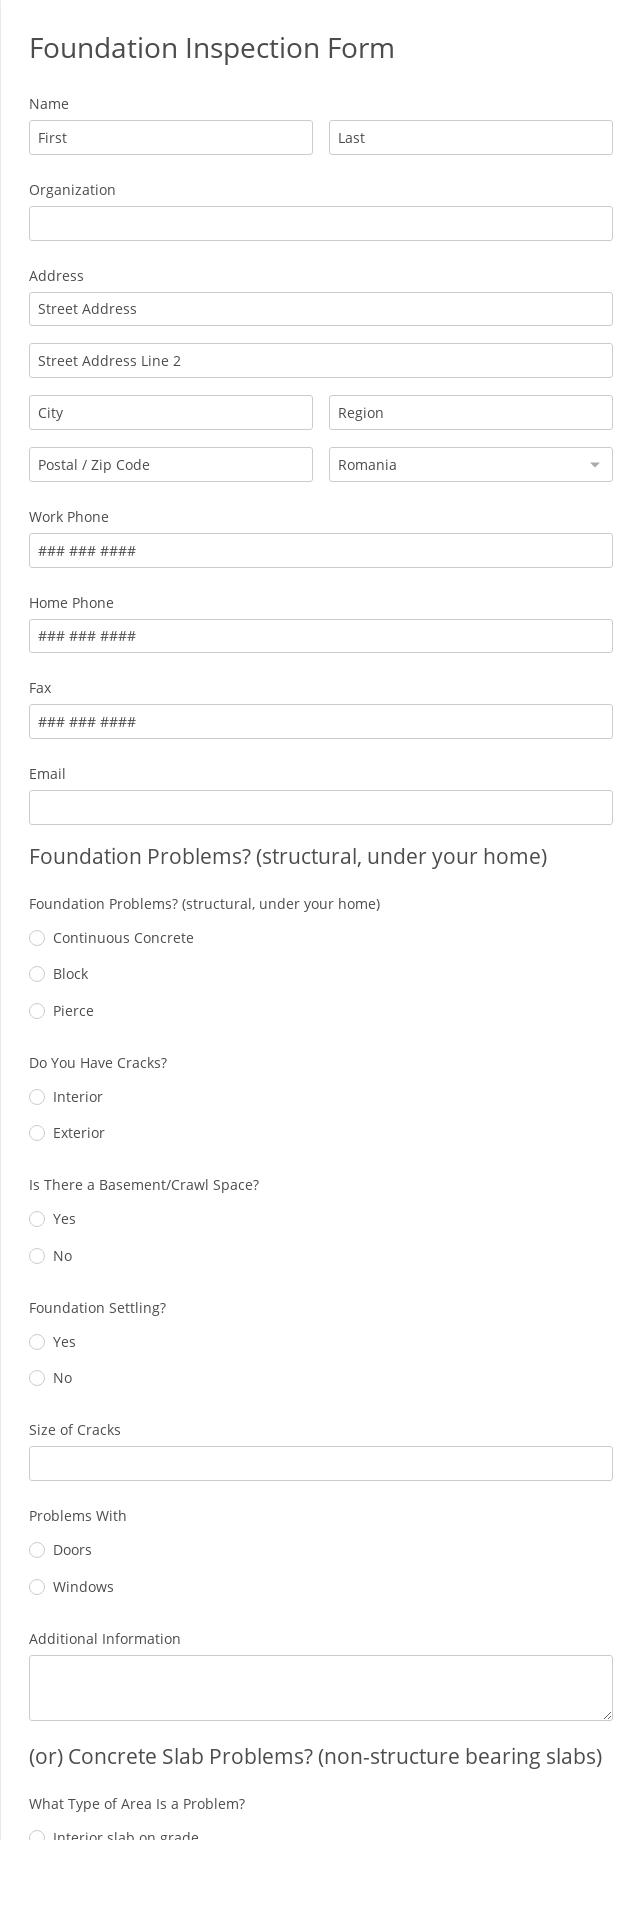 Foundation Inspection Form